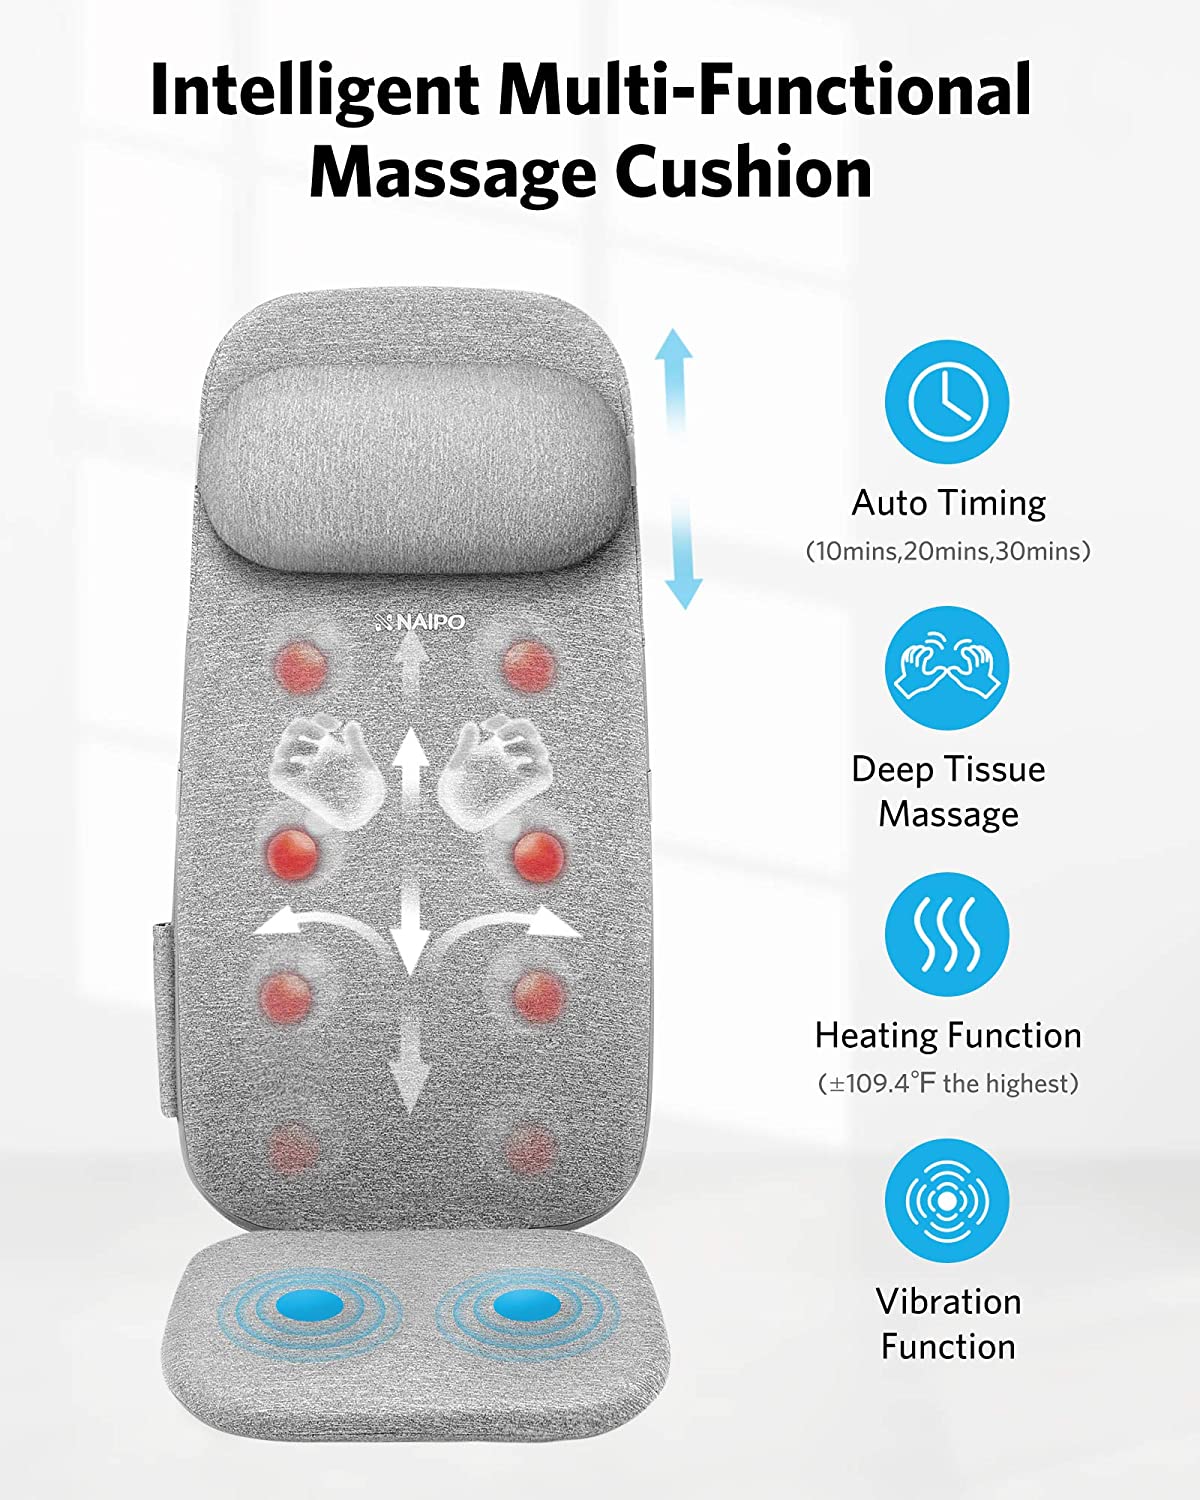 Naipo Shiatsu Massage Pillow With Heat - 20471395